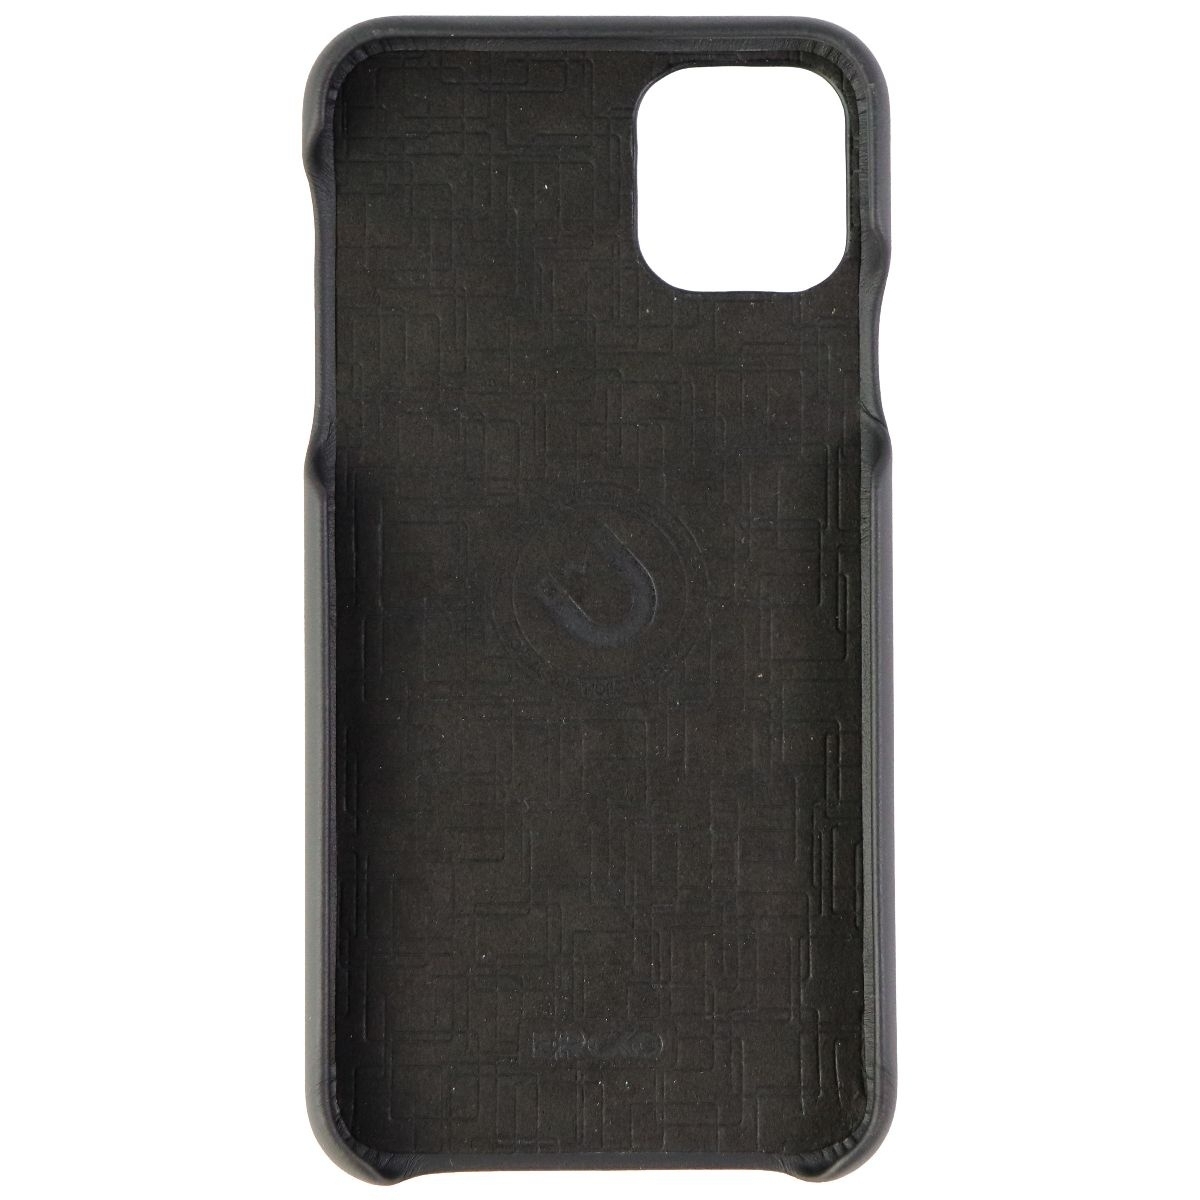 ERCKO 2 In 1 Slim Magnet Case & Wallet For IPhone 11 Pro Max - Black